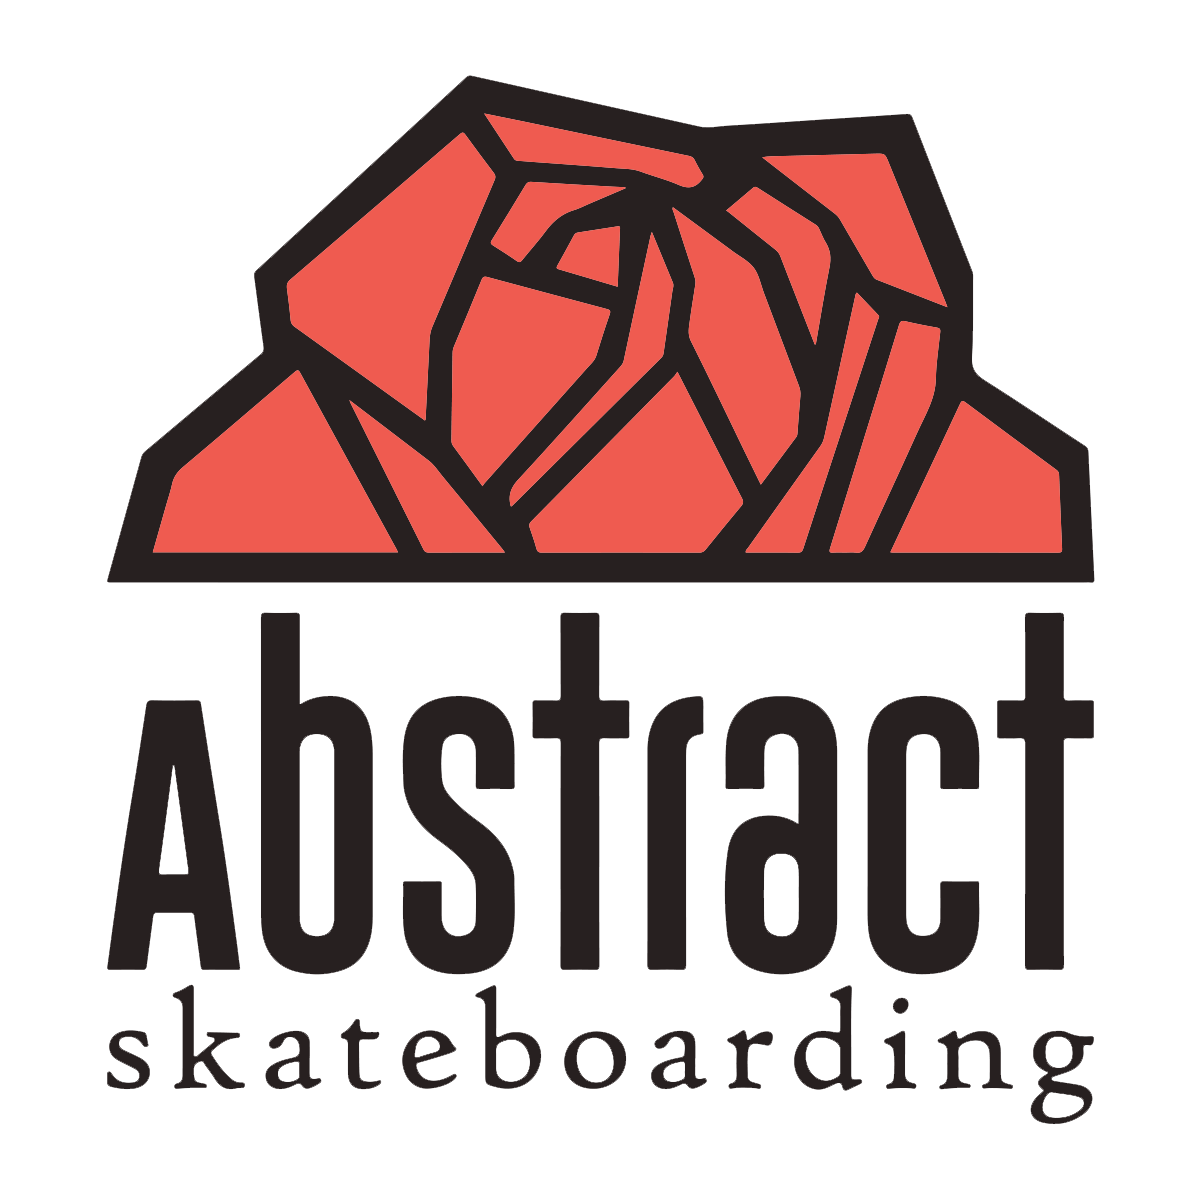 Abstract Skateboarding